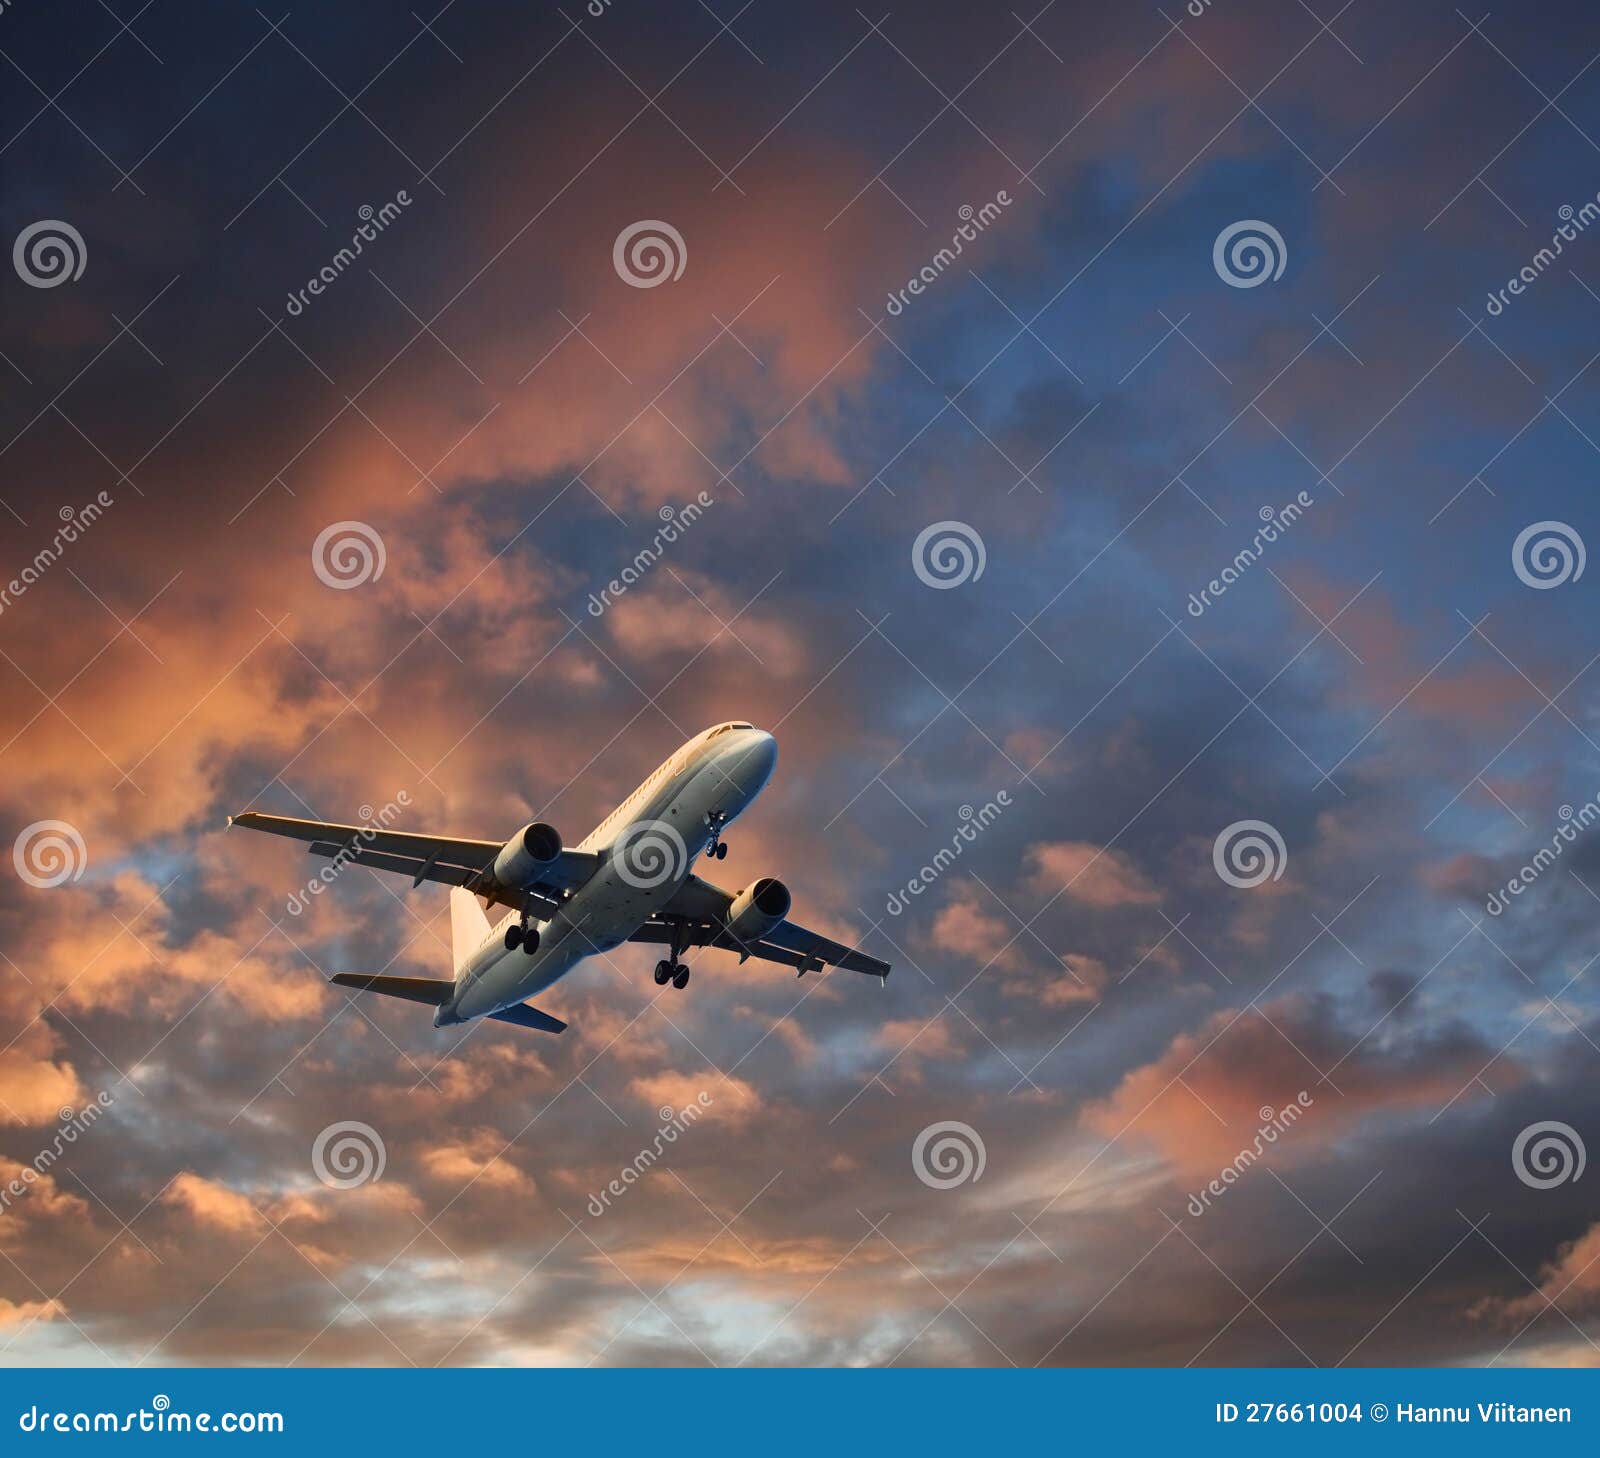 airplane dramatic cloudscape takeoff